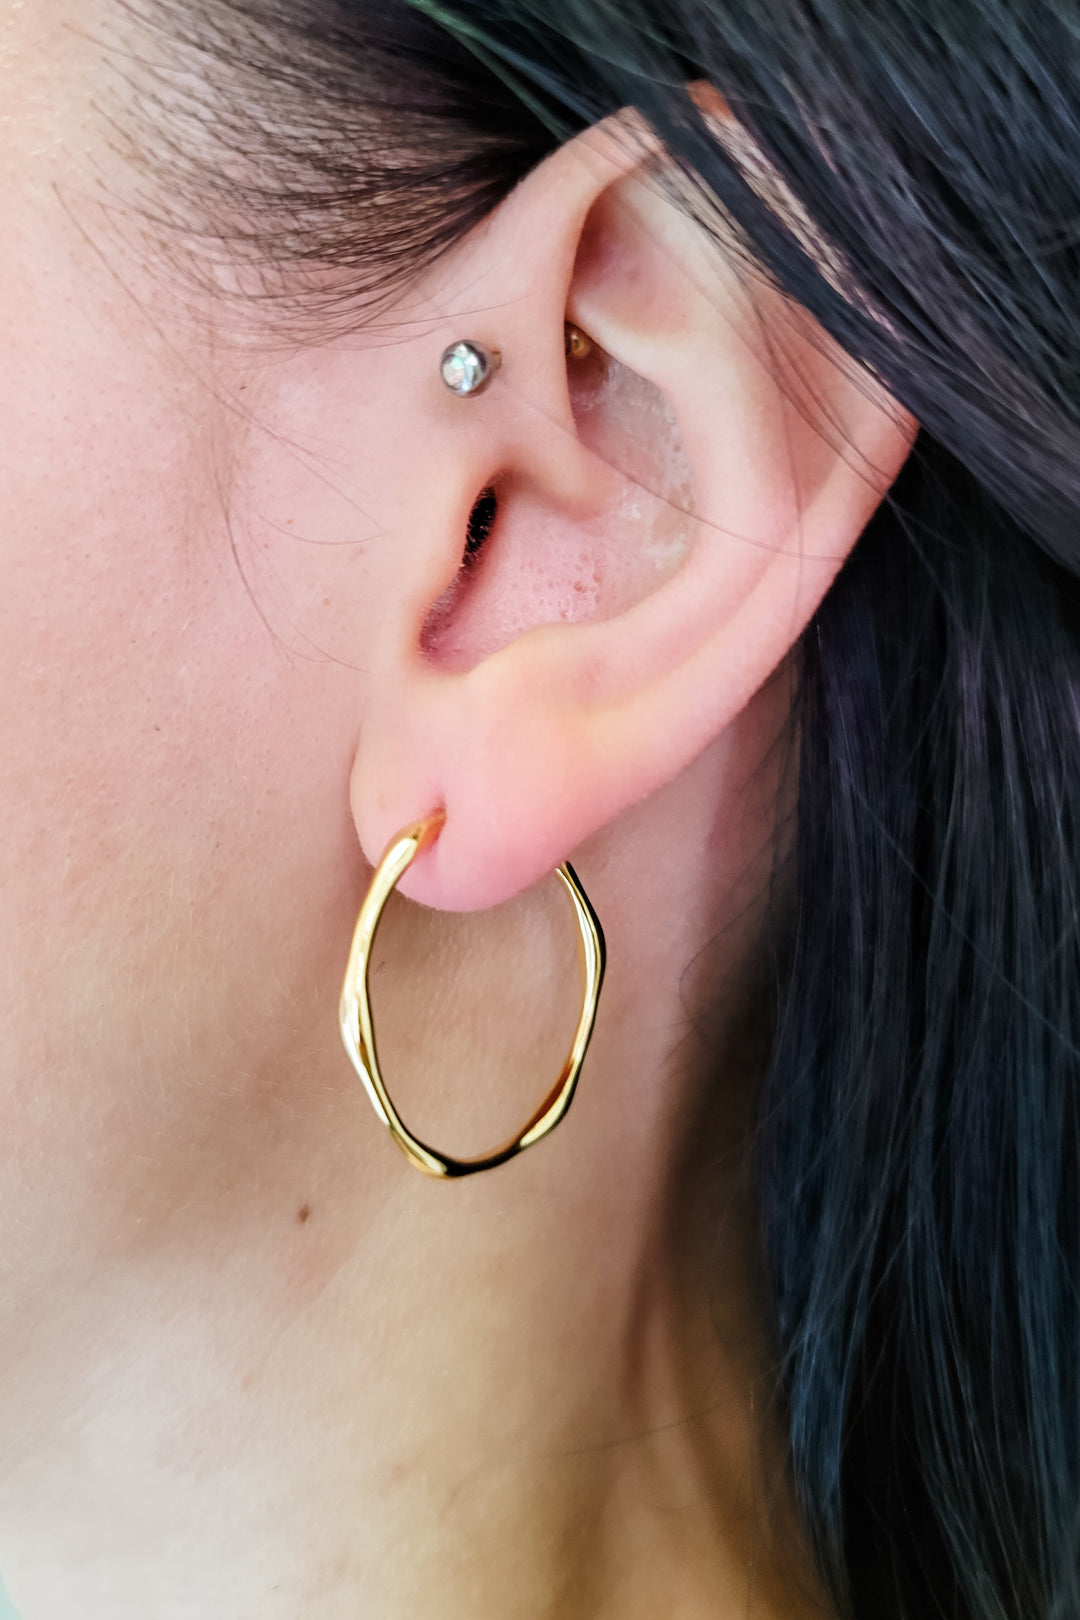 Gold Wavy Hoop Earrings